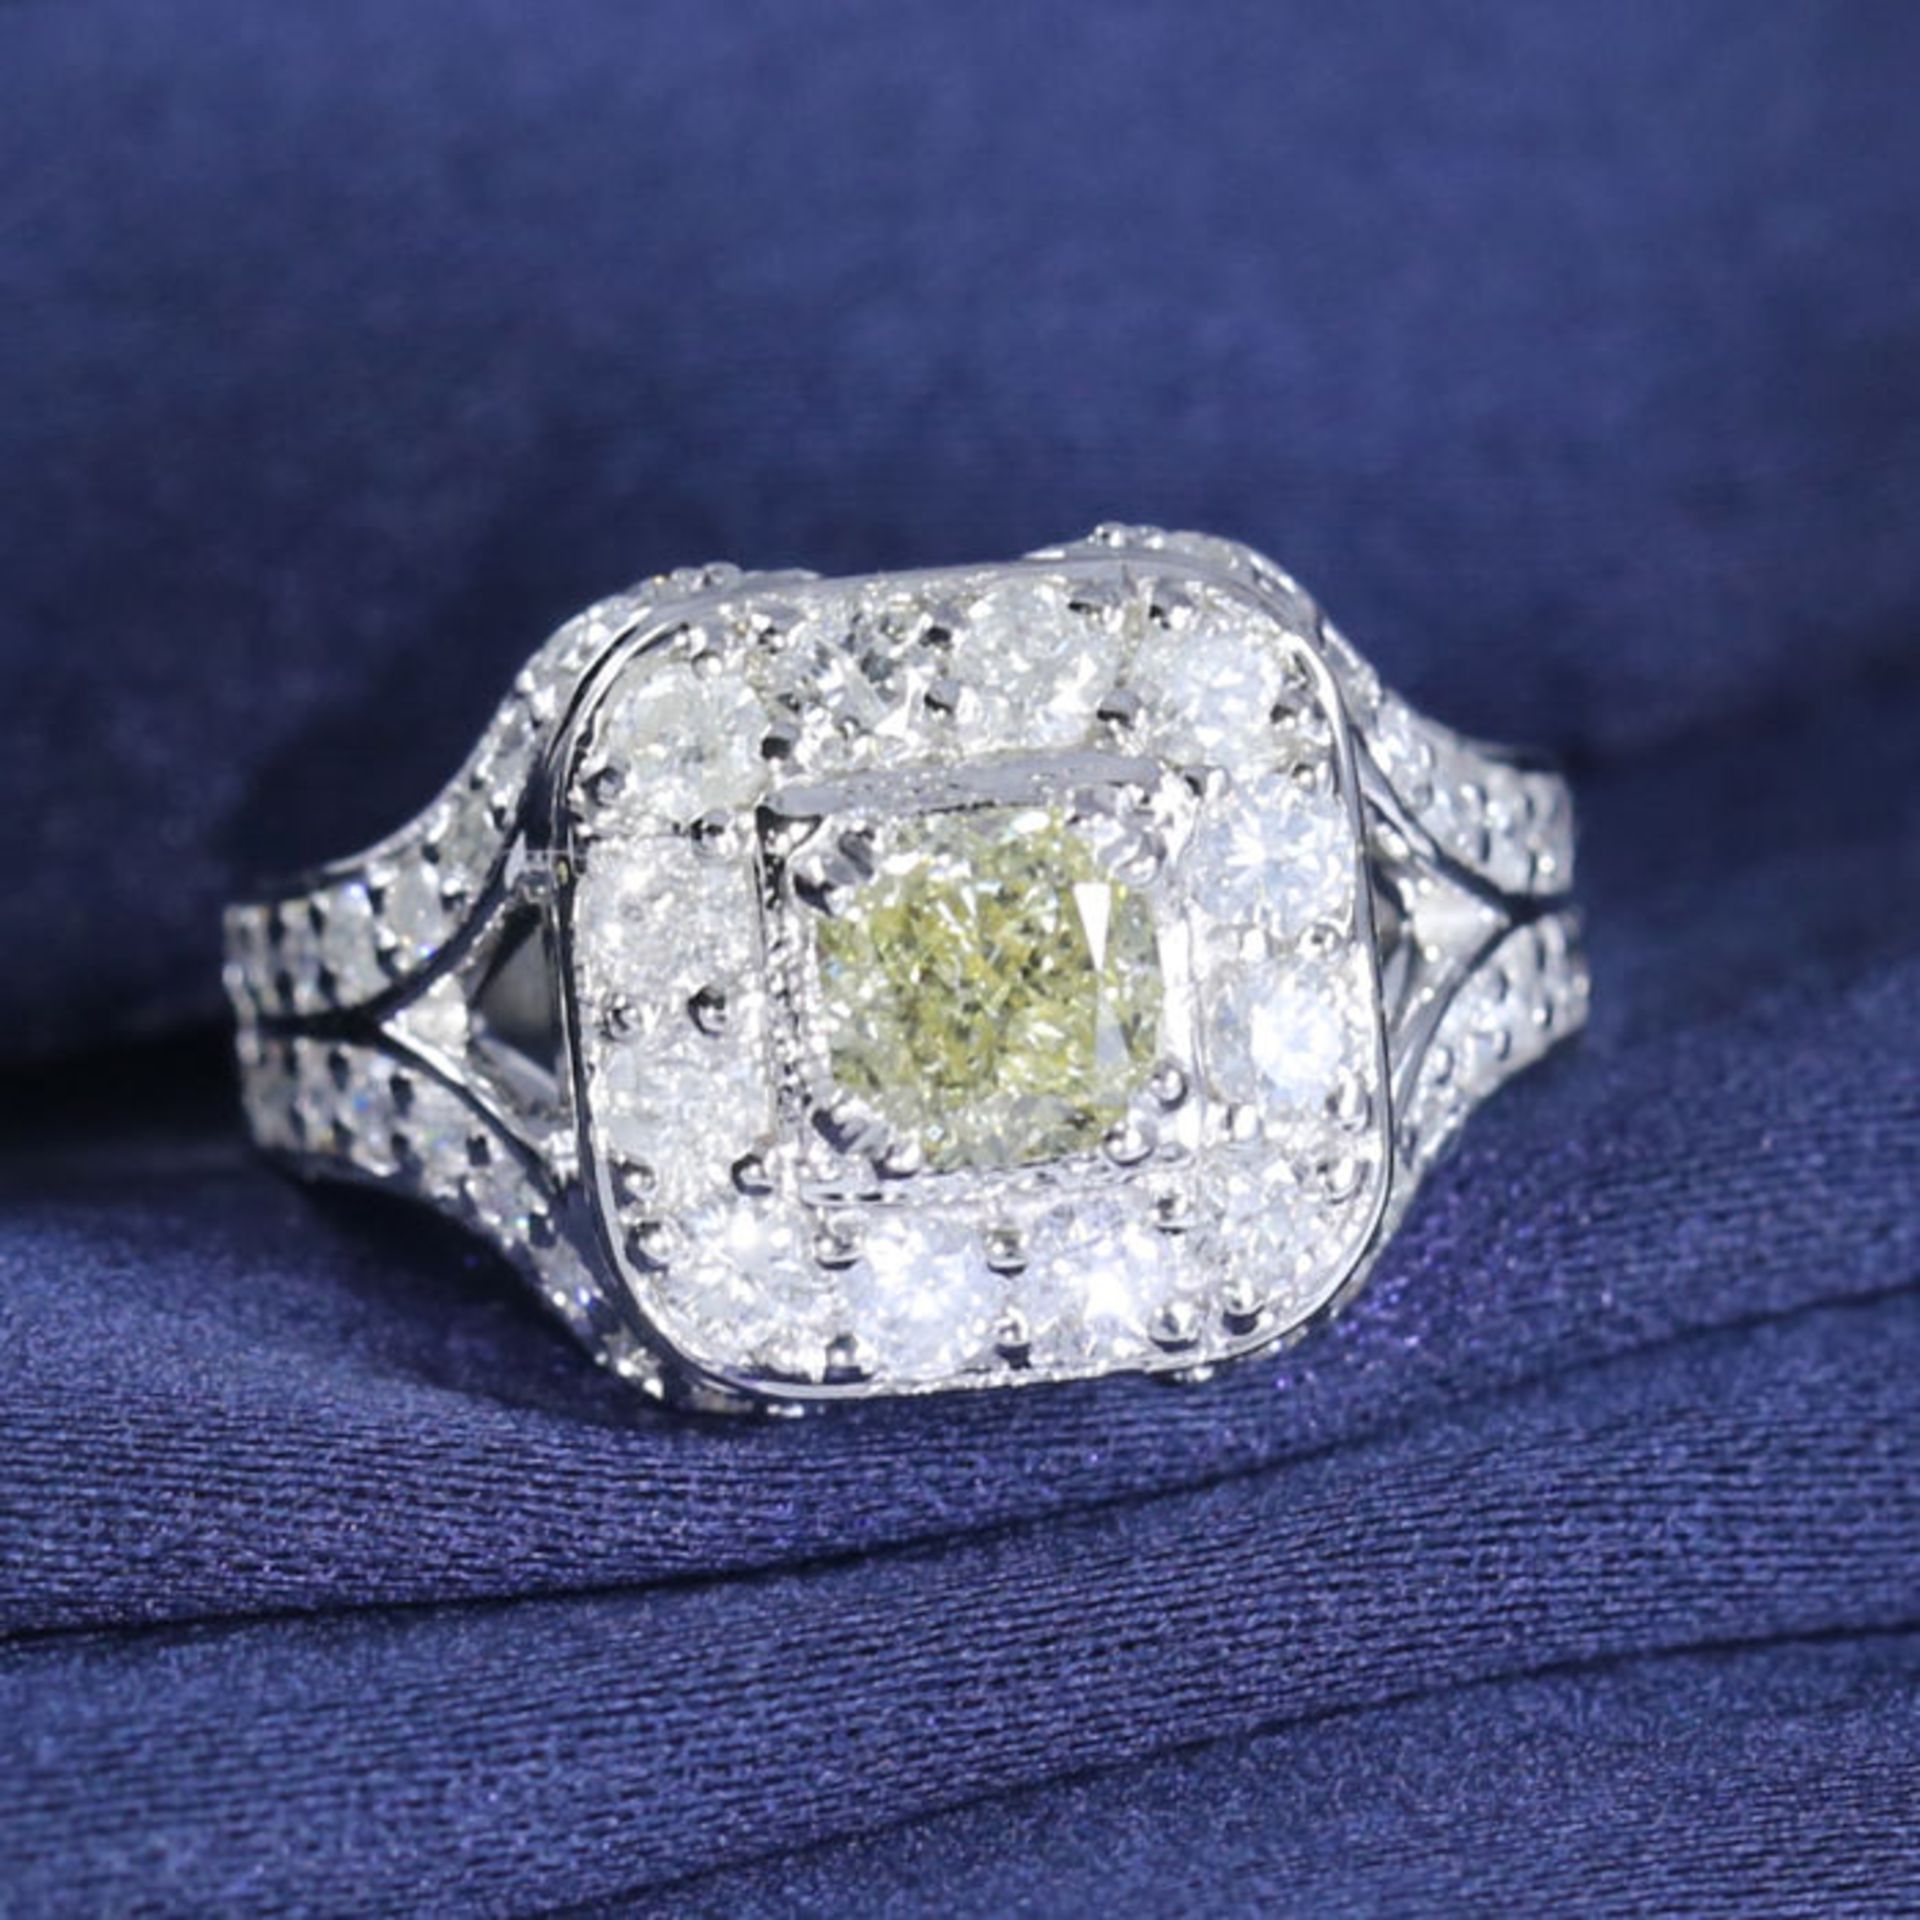 14 K / 585 White Gold Designer Solitaire Diamond (IGI Certified) Ring